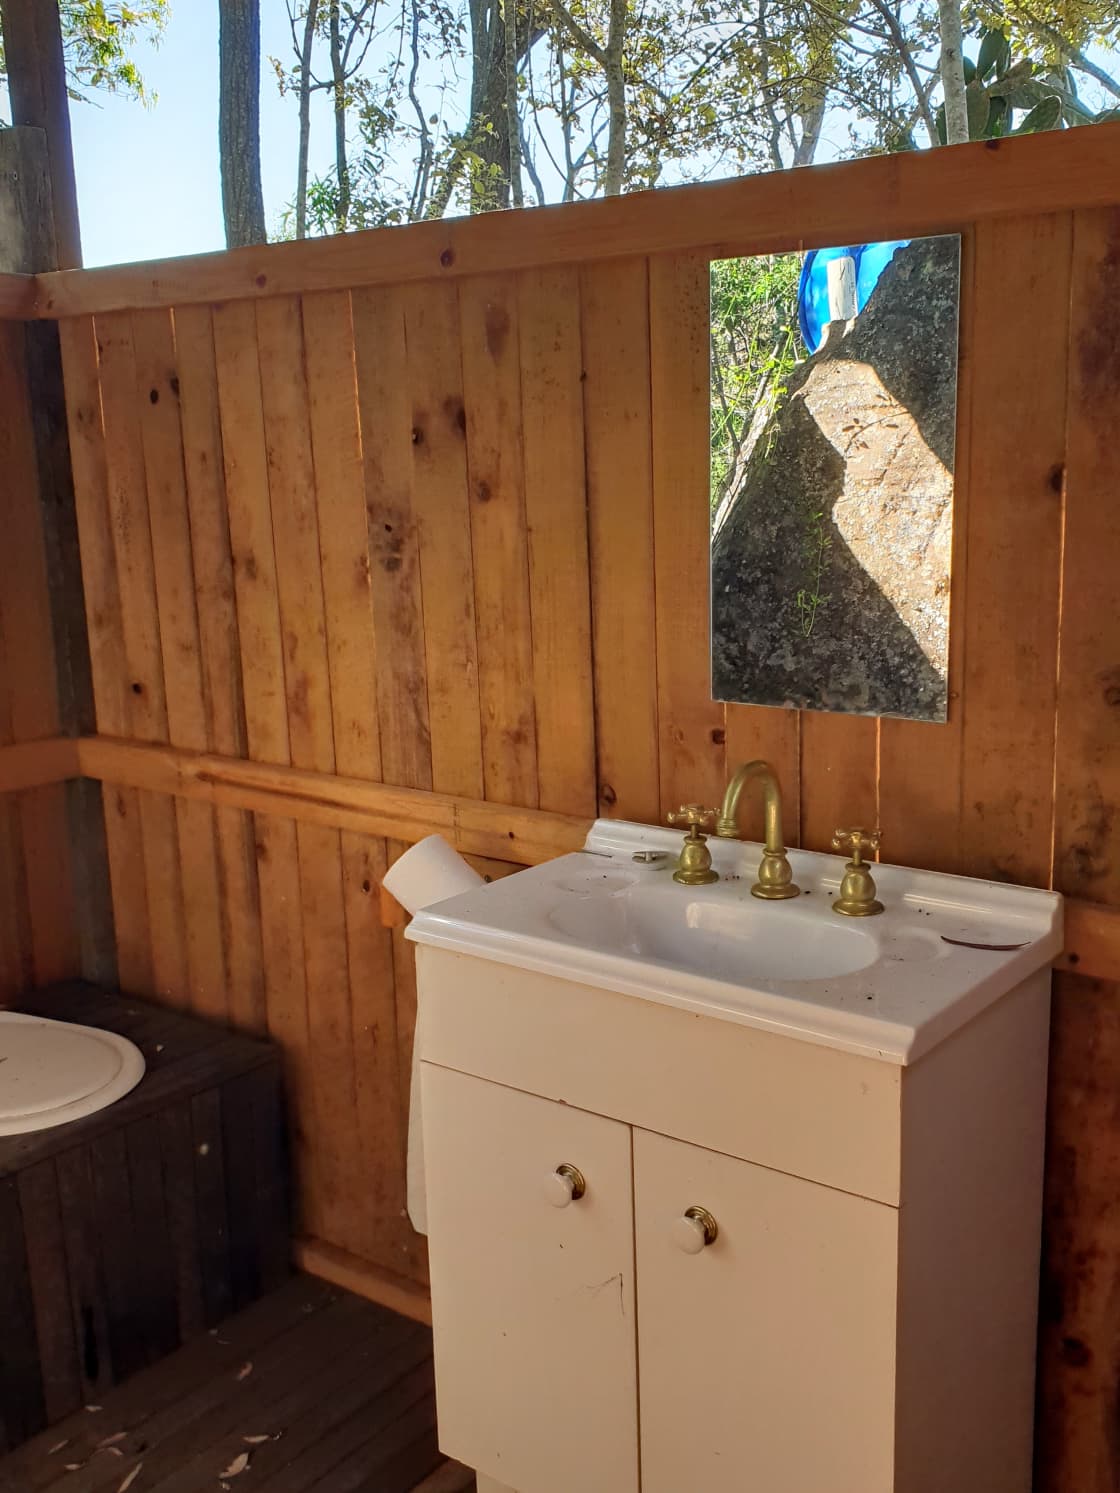 Bush bathroom